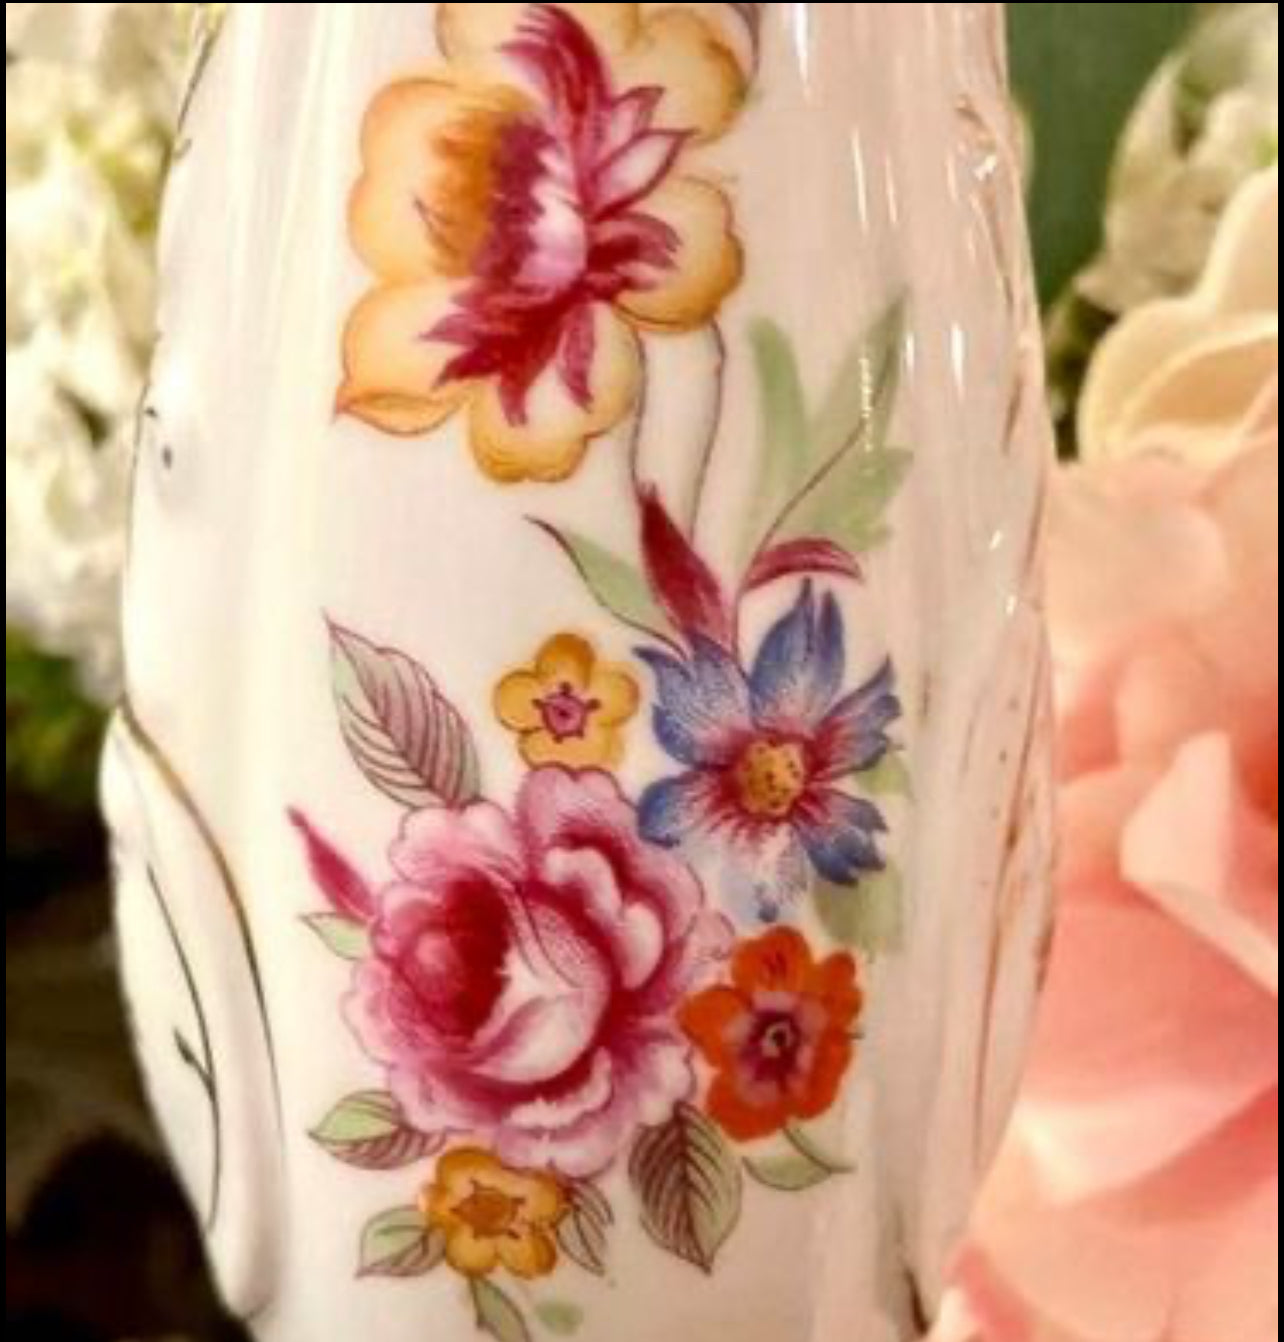 Delightful Pair Vintage floral botanical Porcelain Lamps